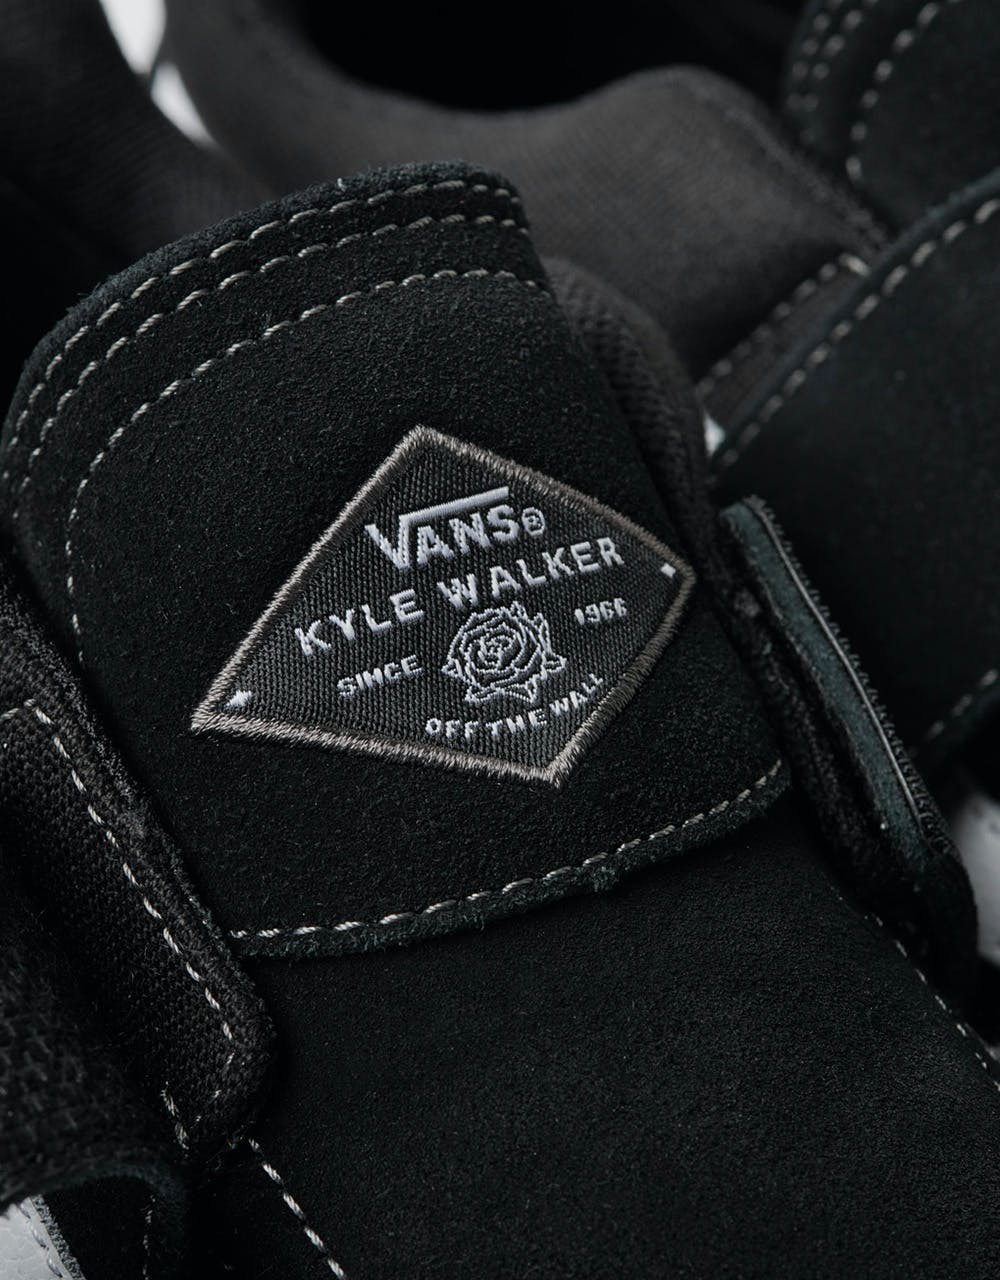 Vans Kyle Walker Pro 2 Skate Shoes - Black/White